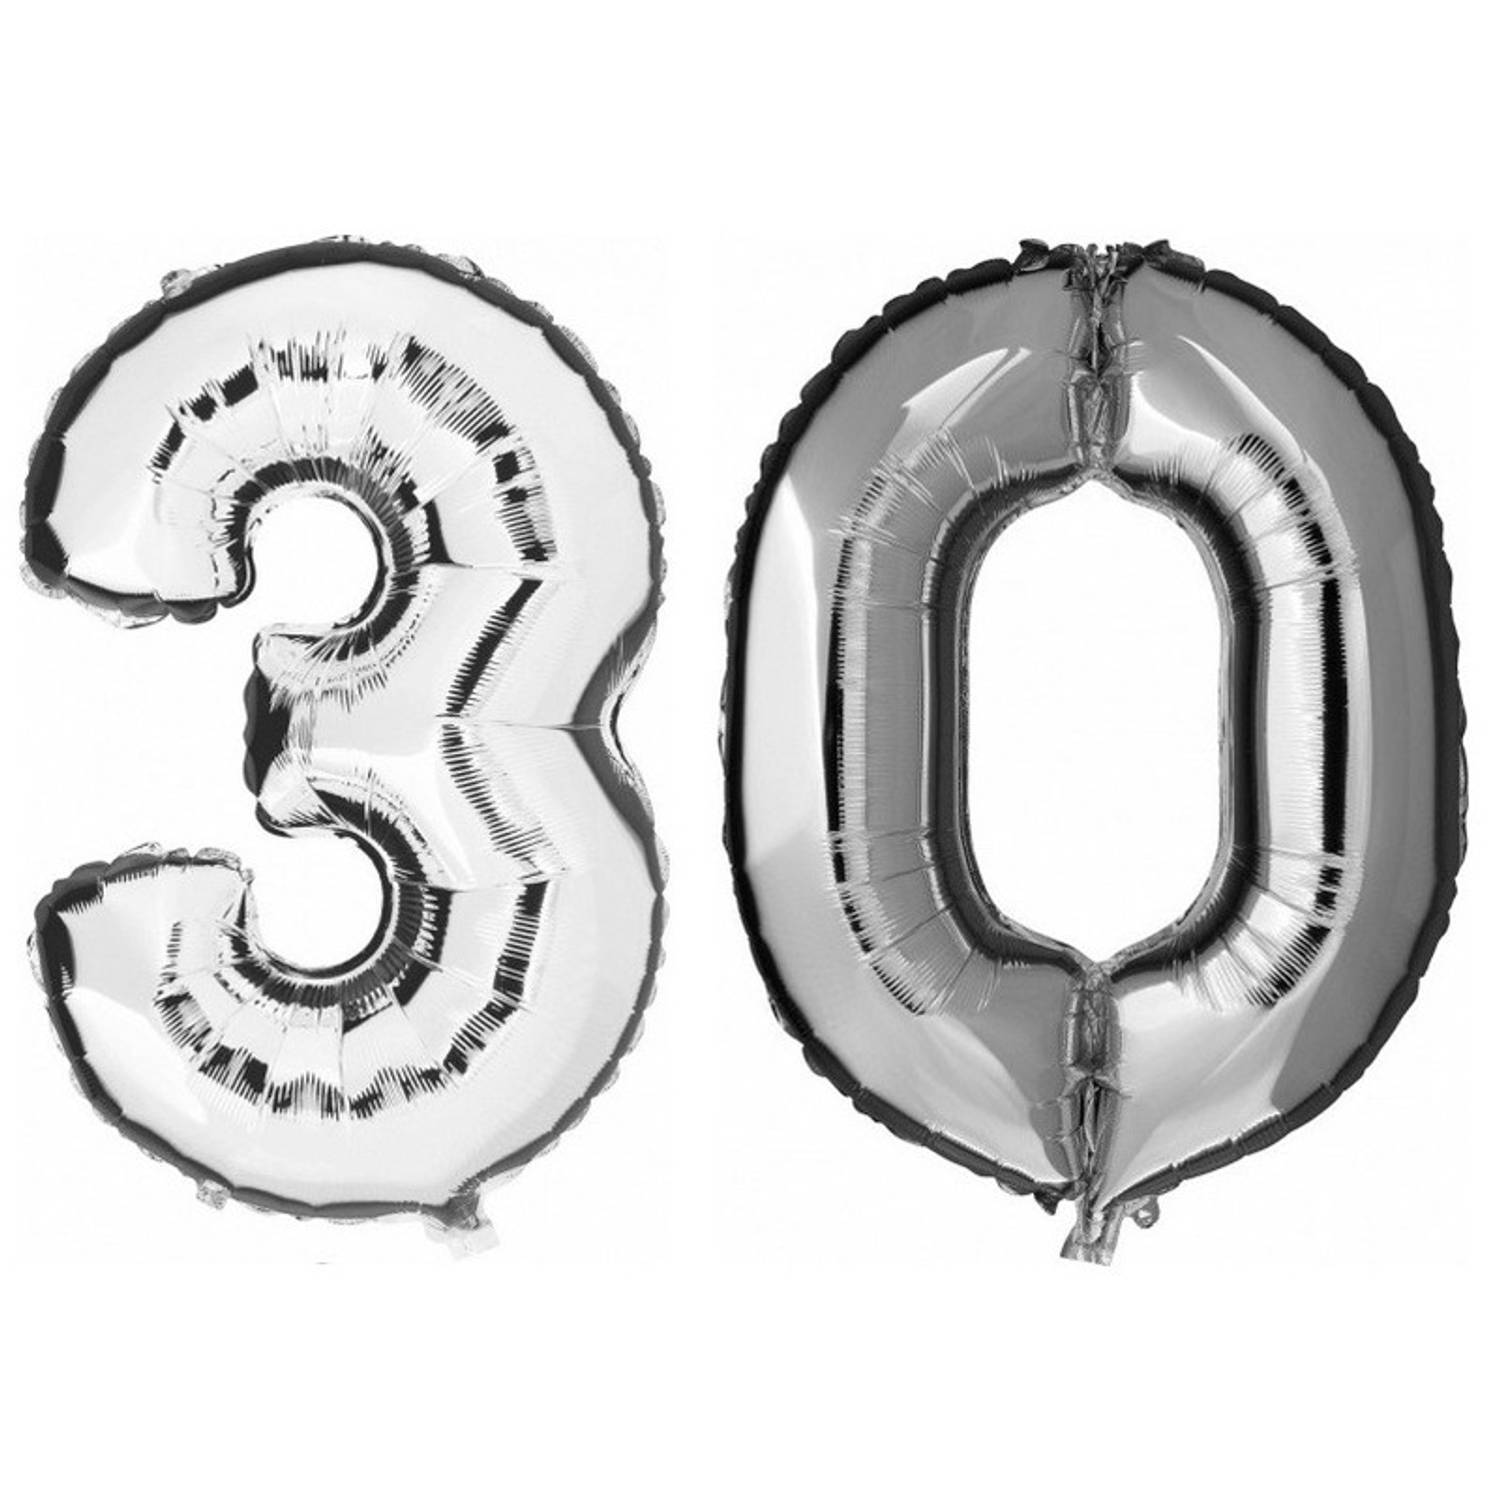 30 jaar leeftijd helium/folie ballonnen zilver feestversiering - Ballonnen